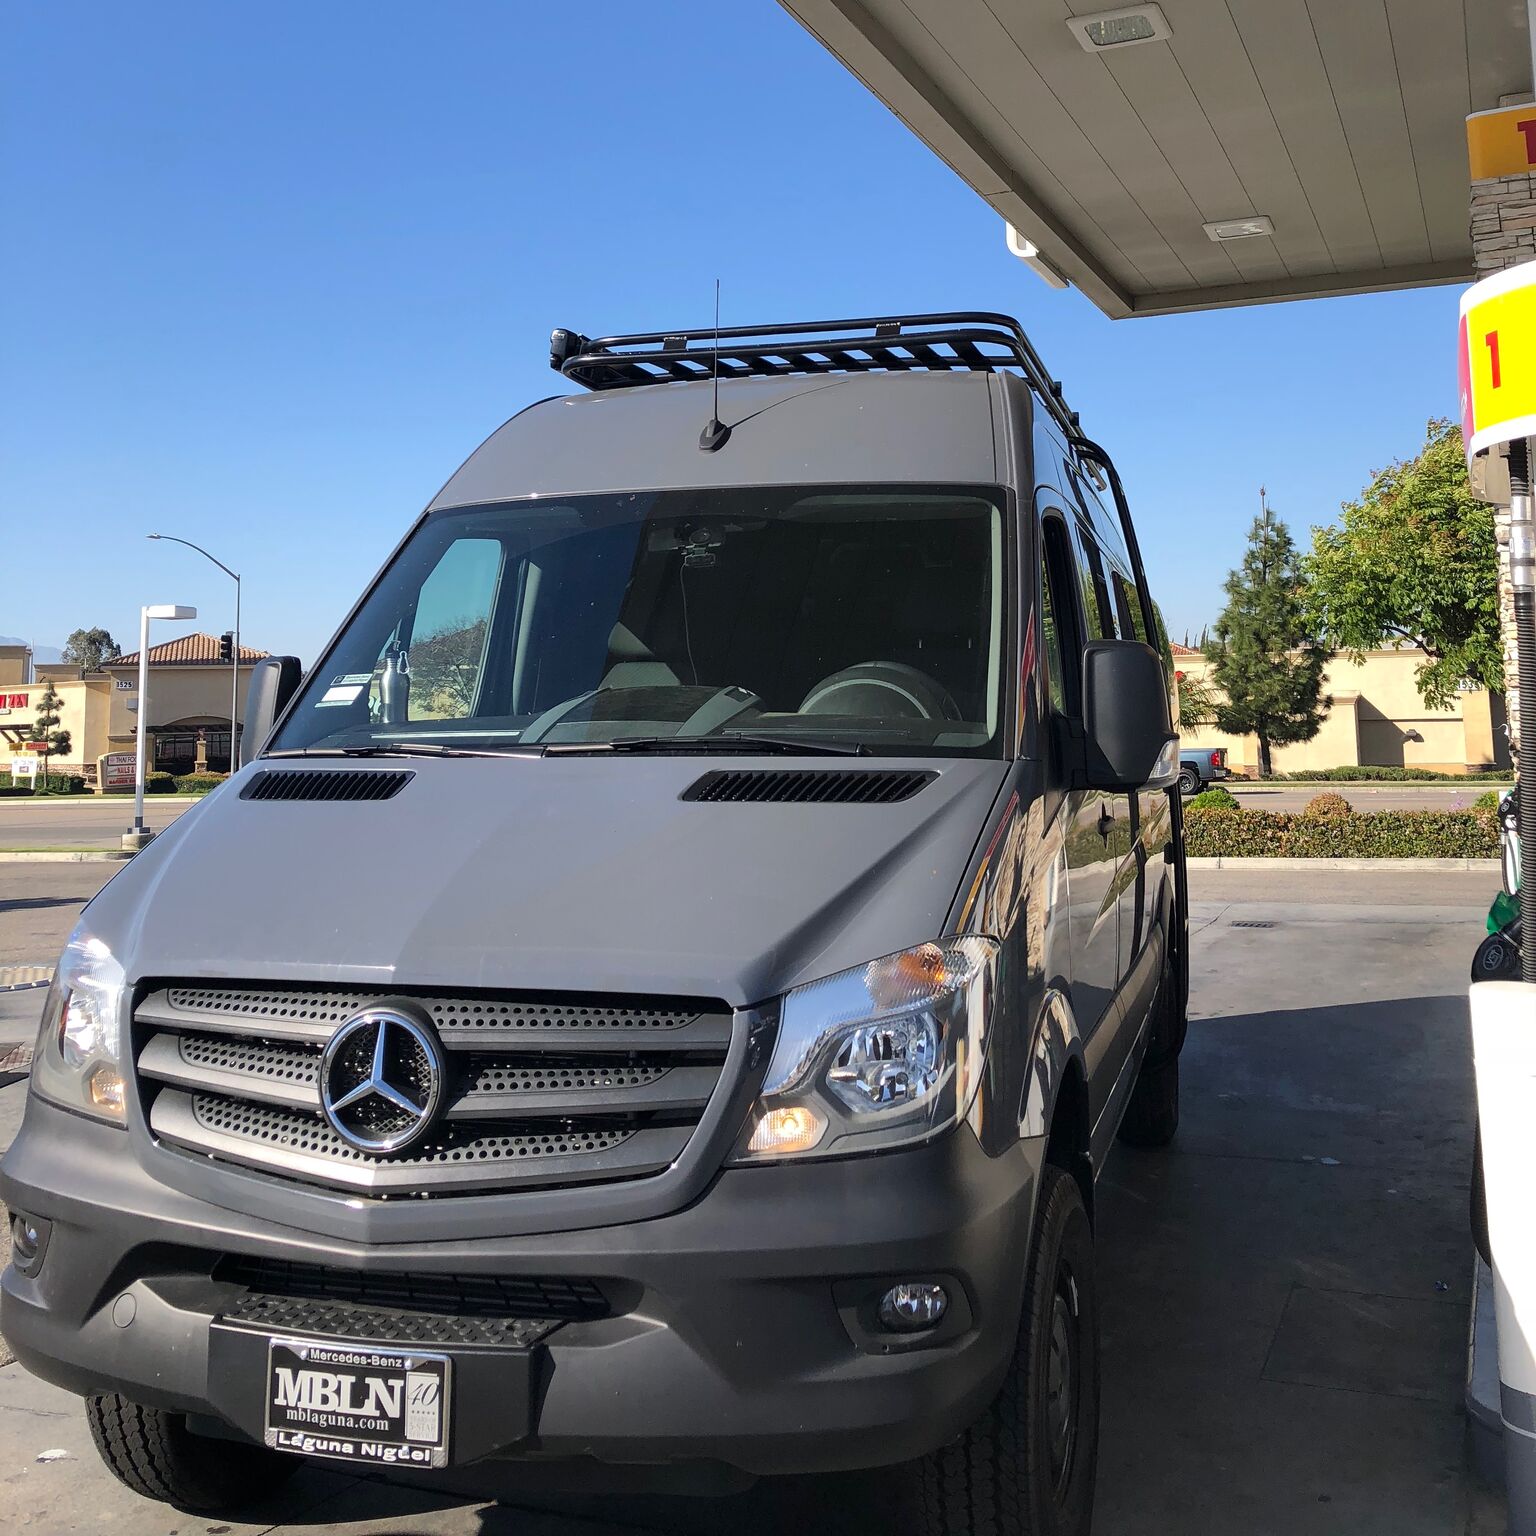 Mercedes sprinter van parked at the gas station